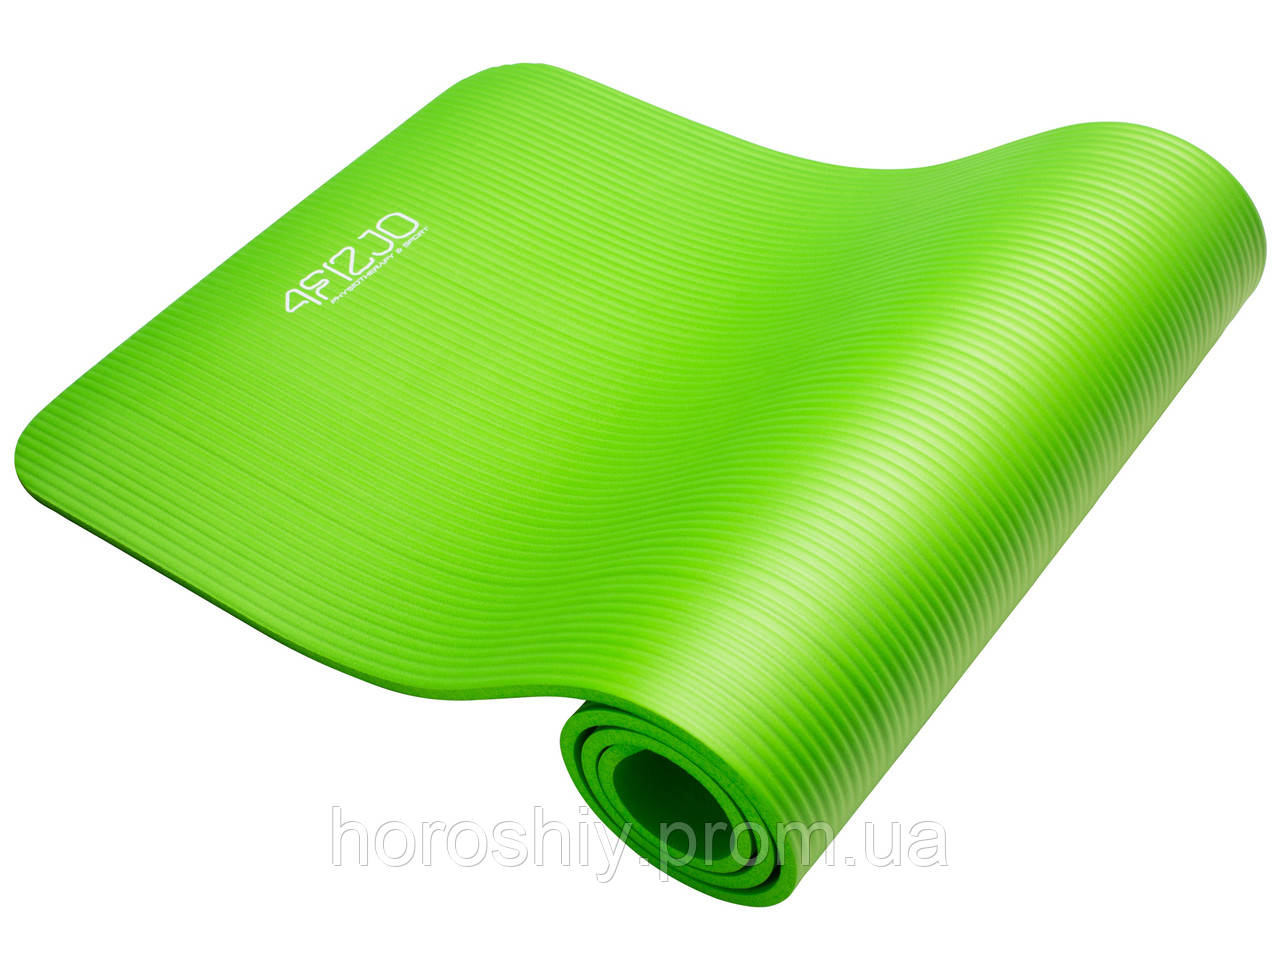 Каучук килимок для йоги та фітнесу Йога мат нековзний 1 см Зелений